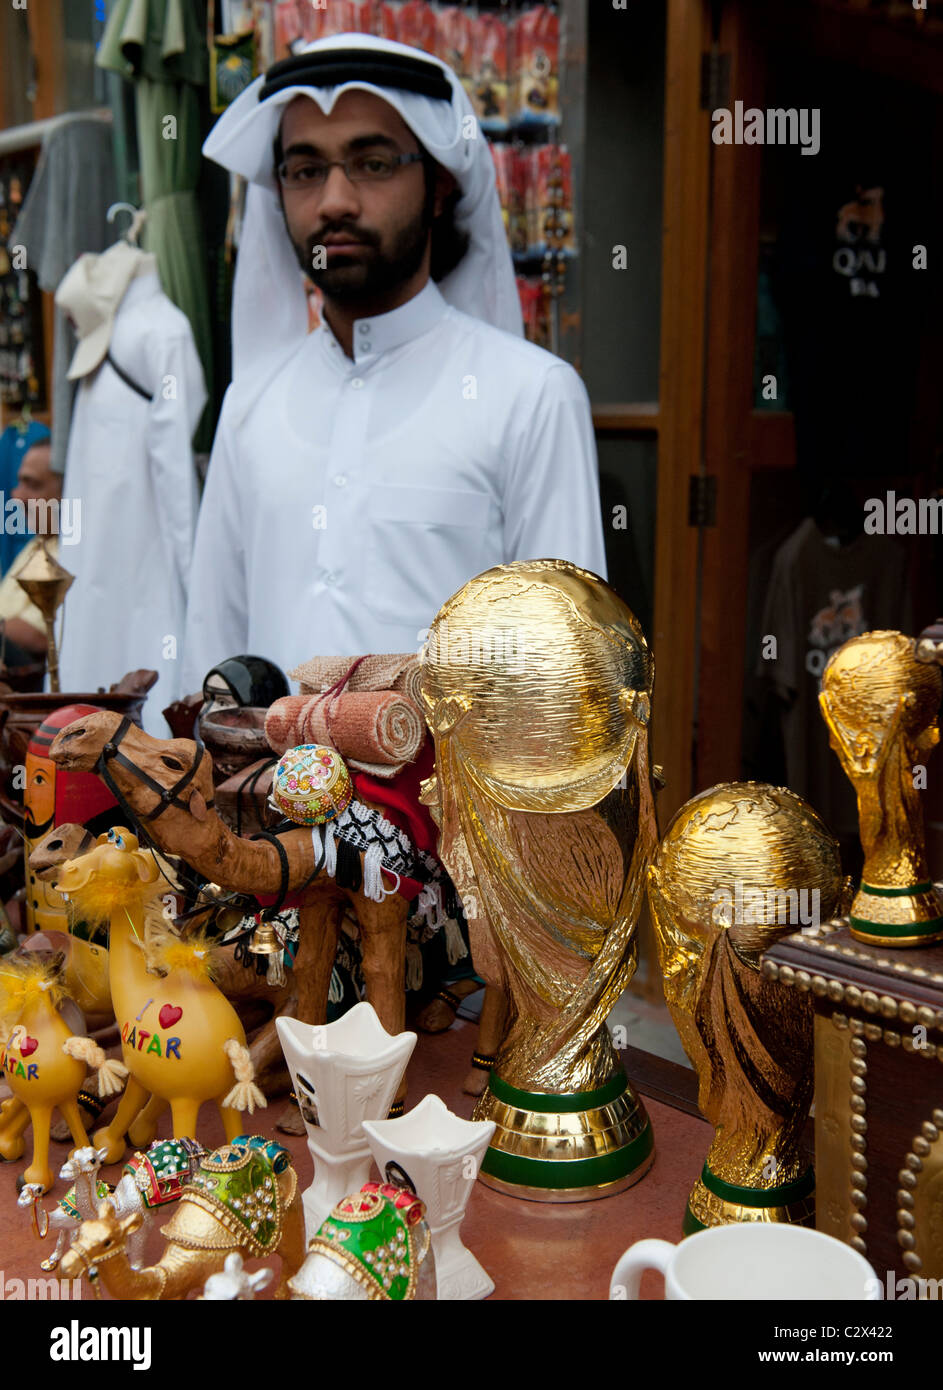 Qatari man selling replica World Cup trophies on tourist market stall in Doha Qatar Stock Photo